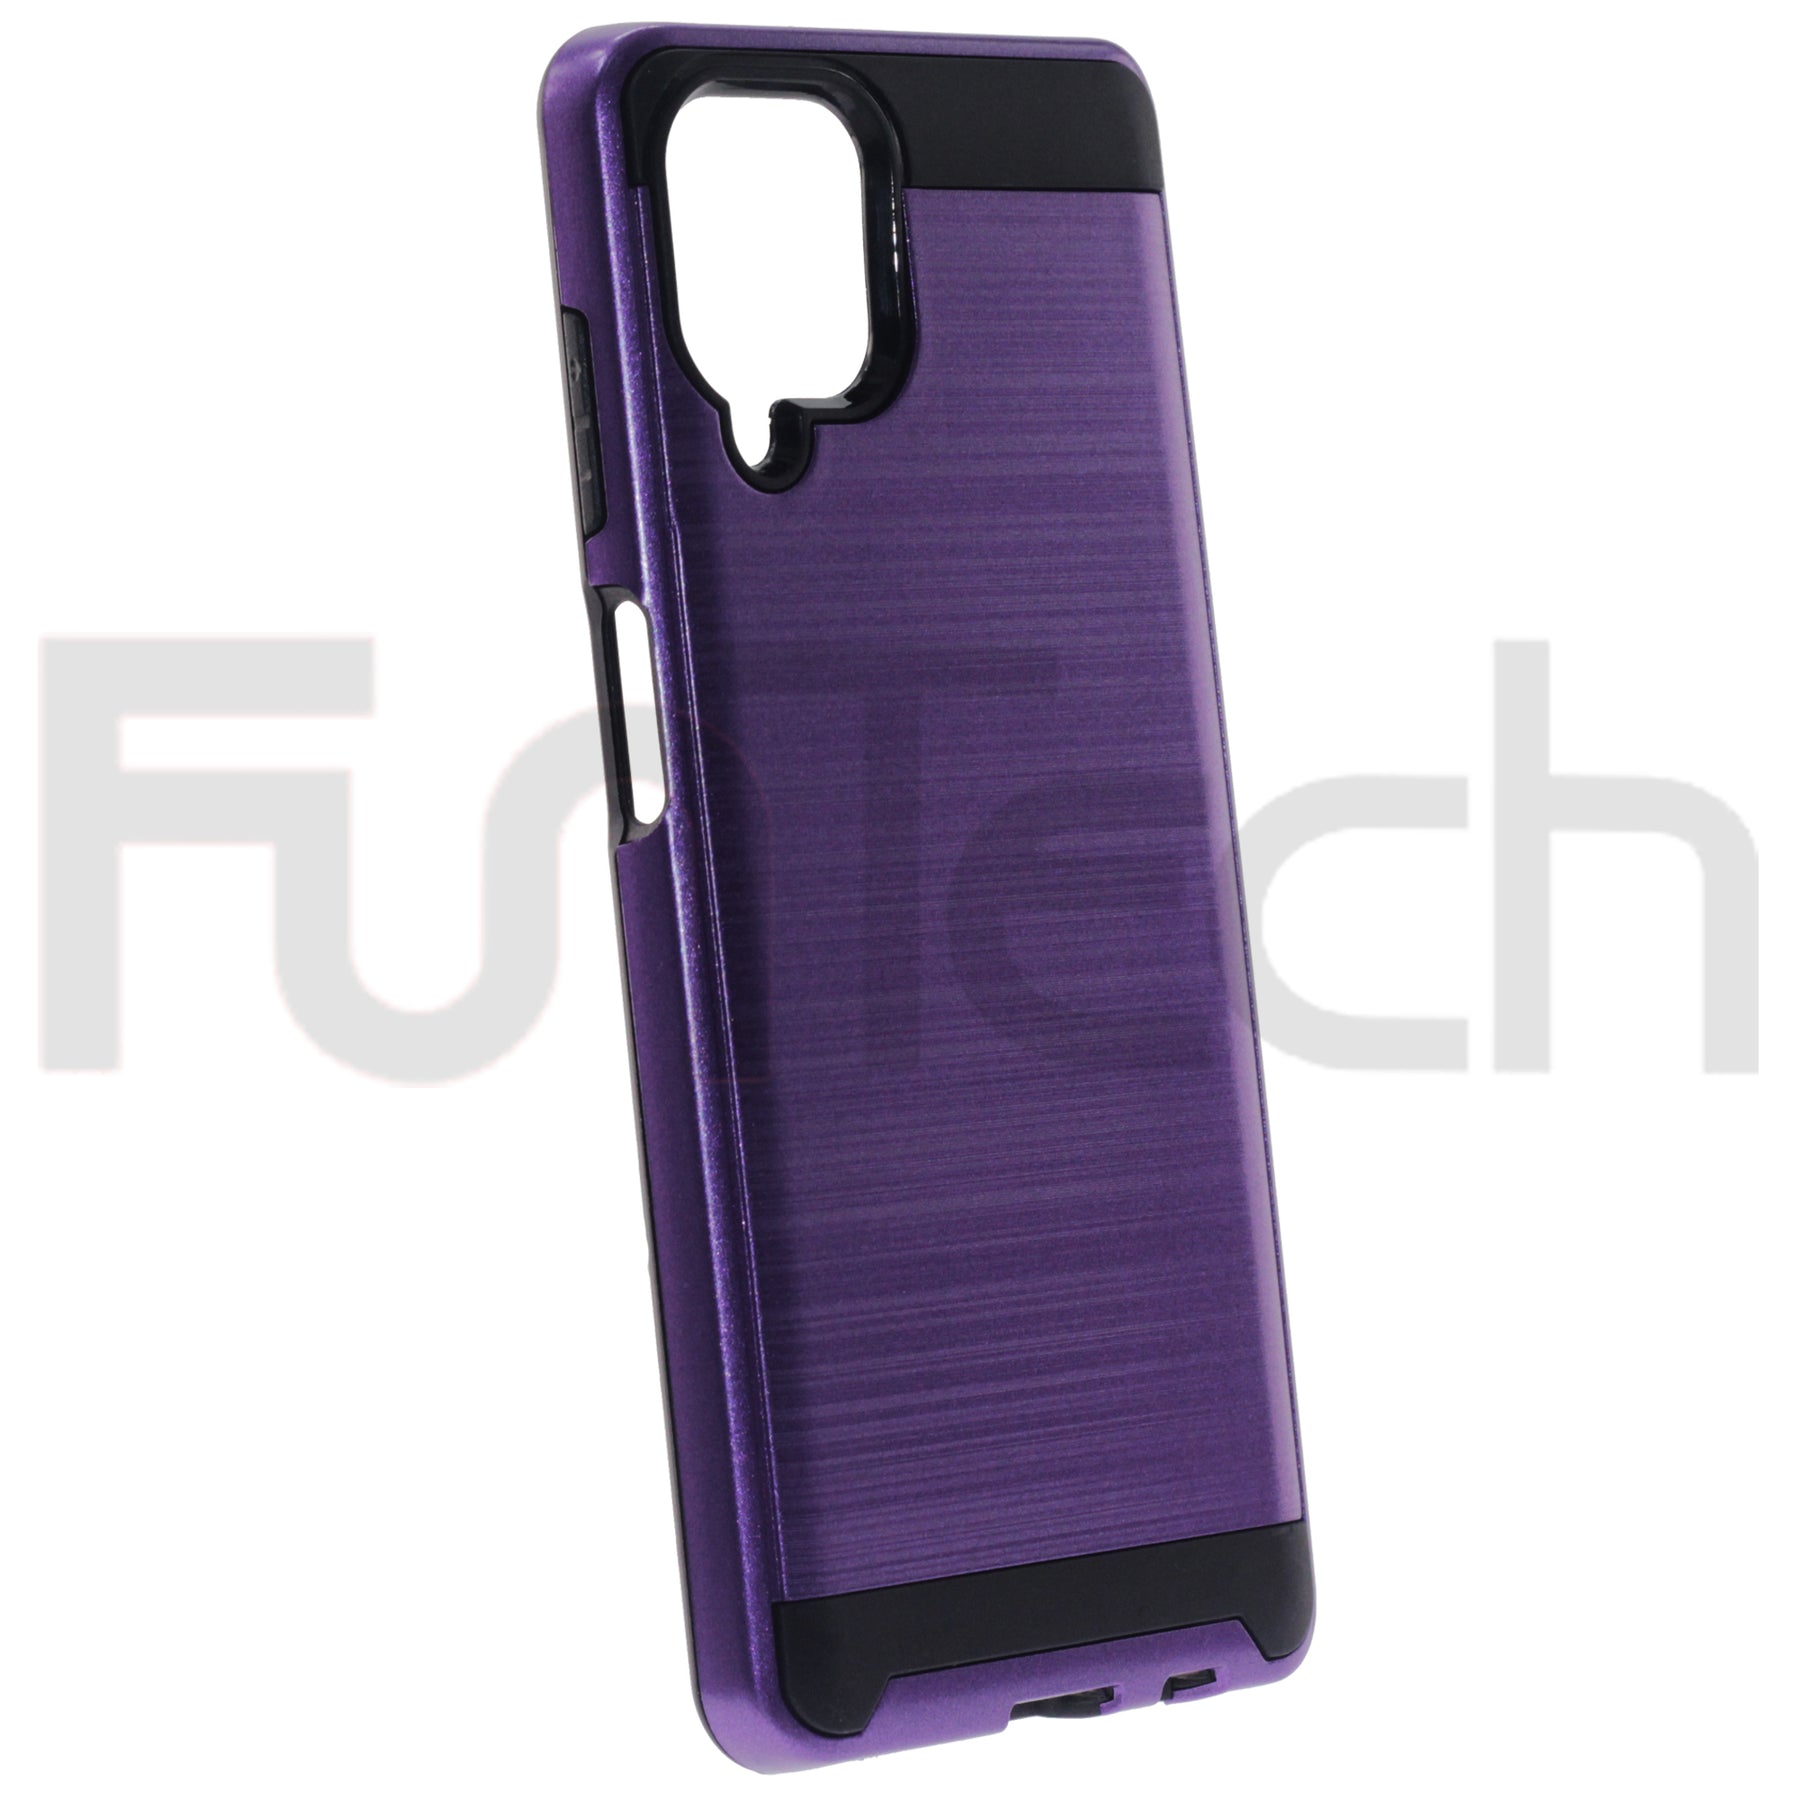 Samsung A12 (5G), Slim Armor Case, Color Purple.